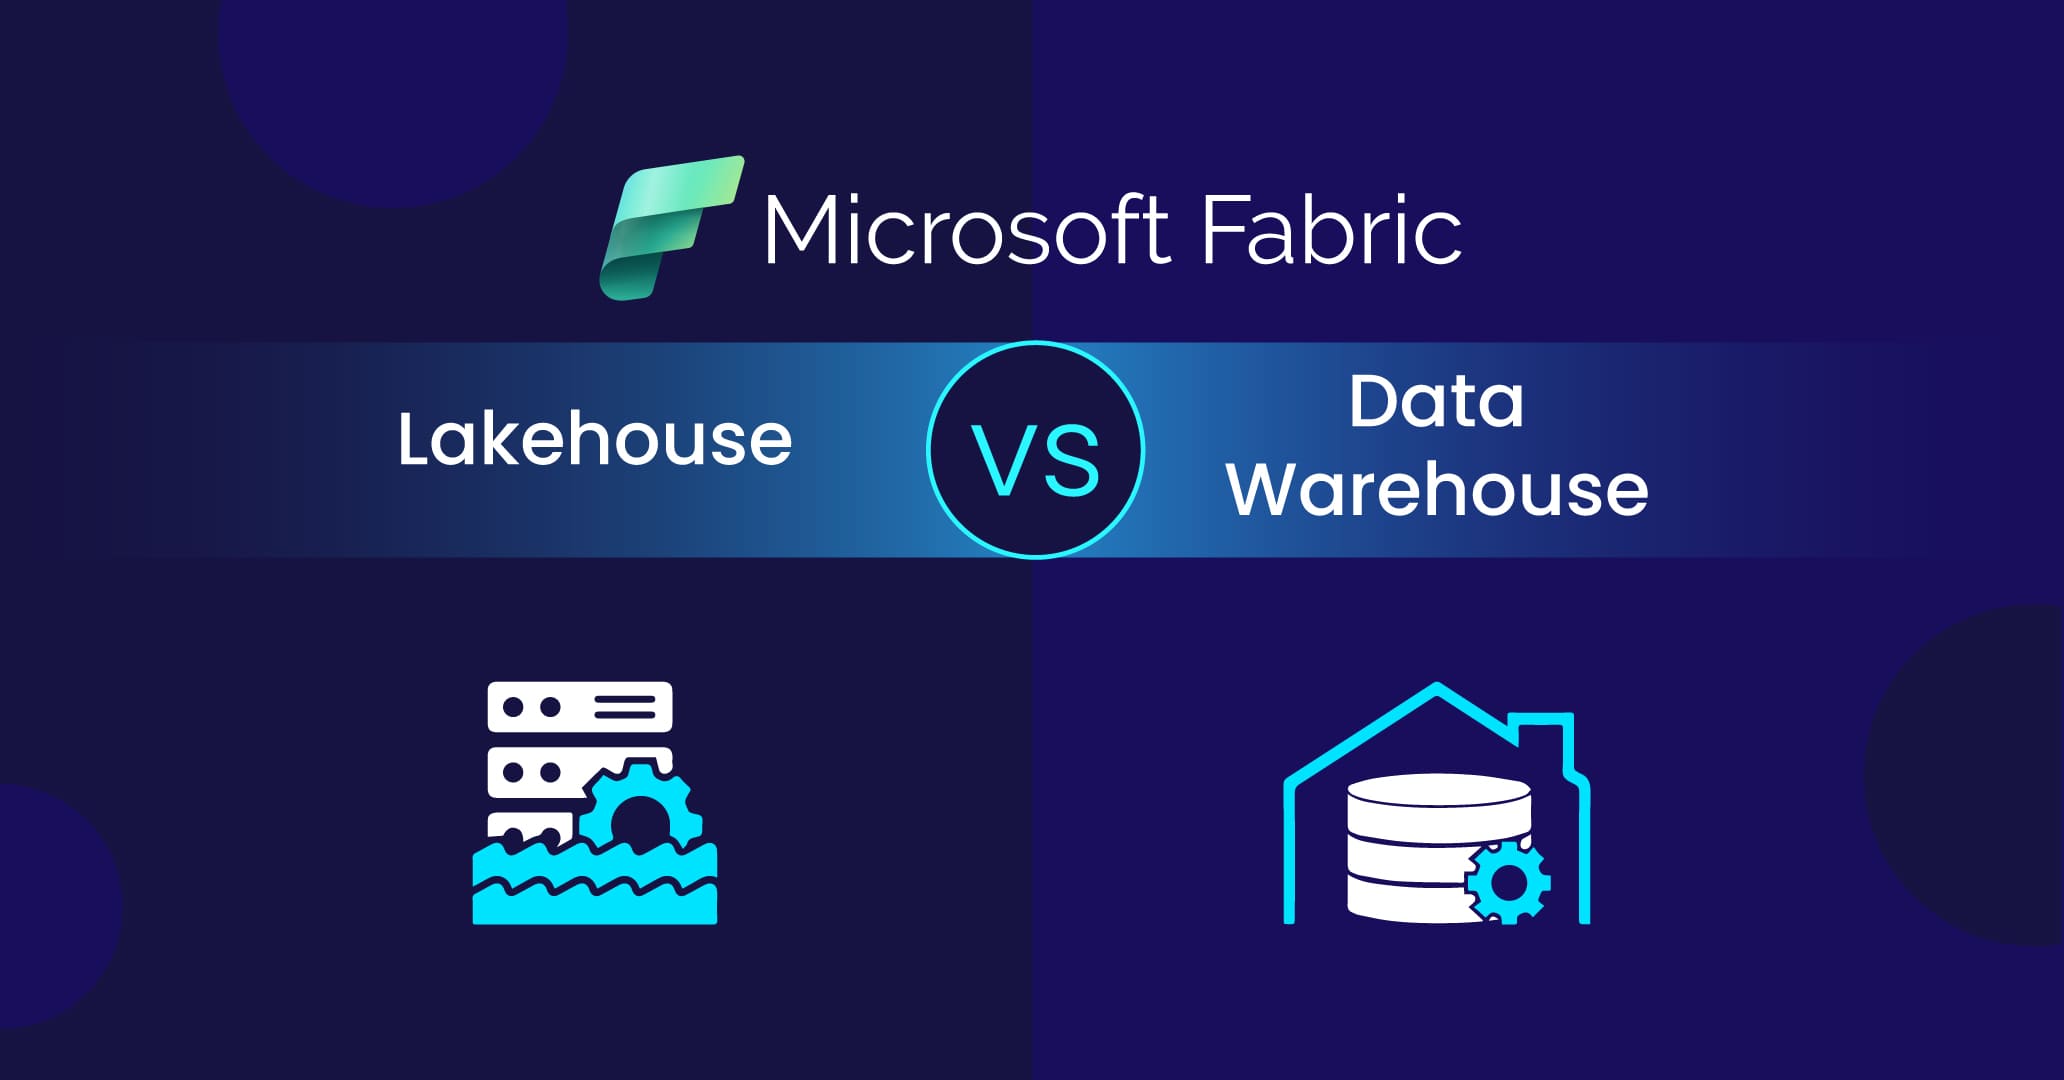 Microsoft-Fabric-Lakehouse-vs-Data-Warehouse